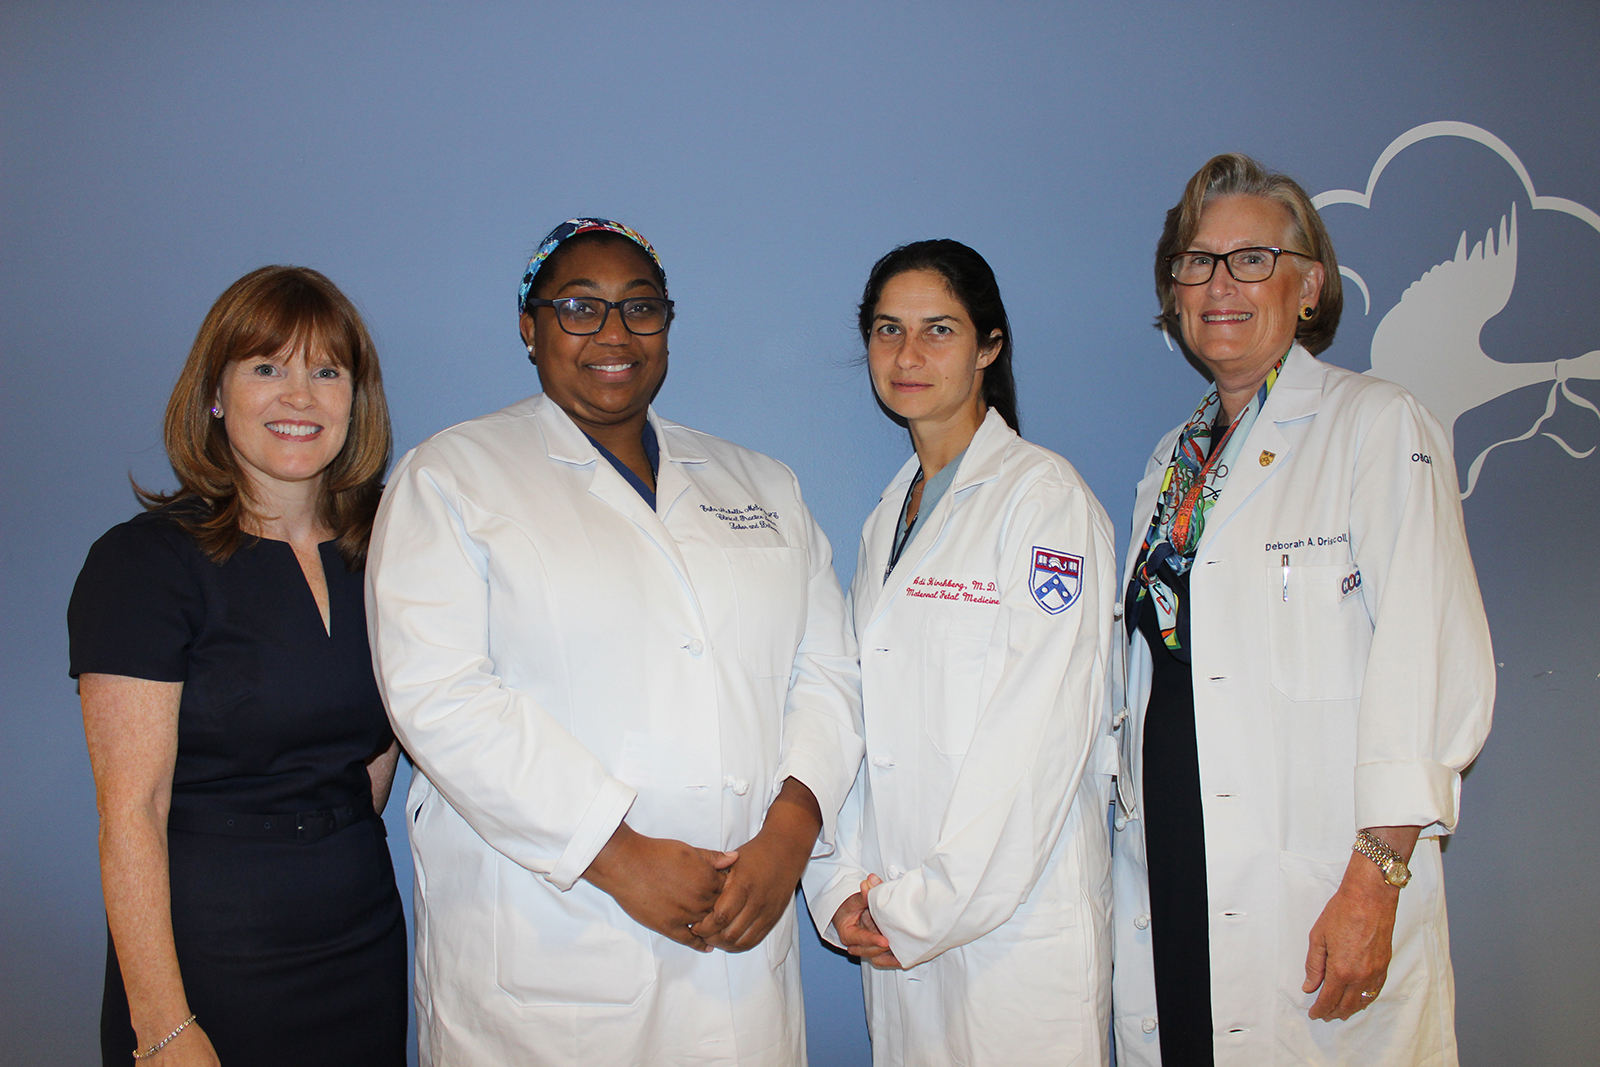 Members of the winning team at Penn Medicine’s Hospital of the University of Pennsylvania.